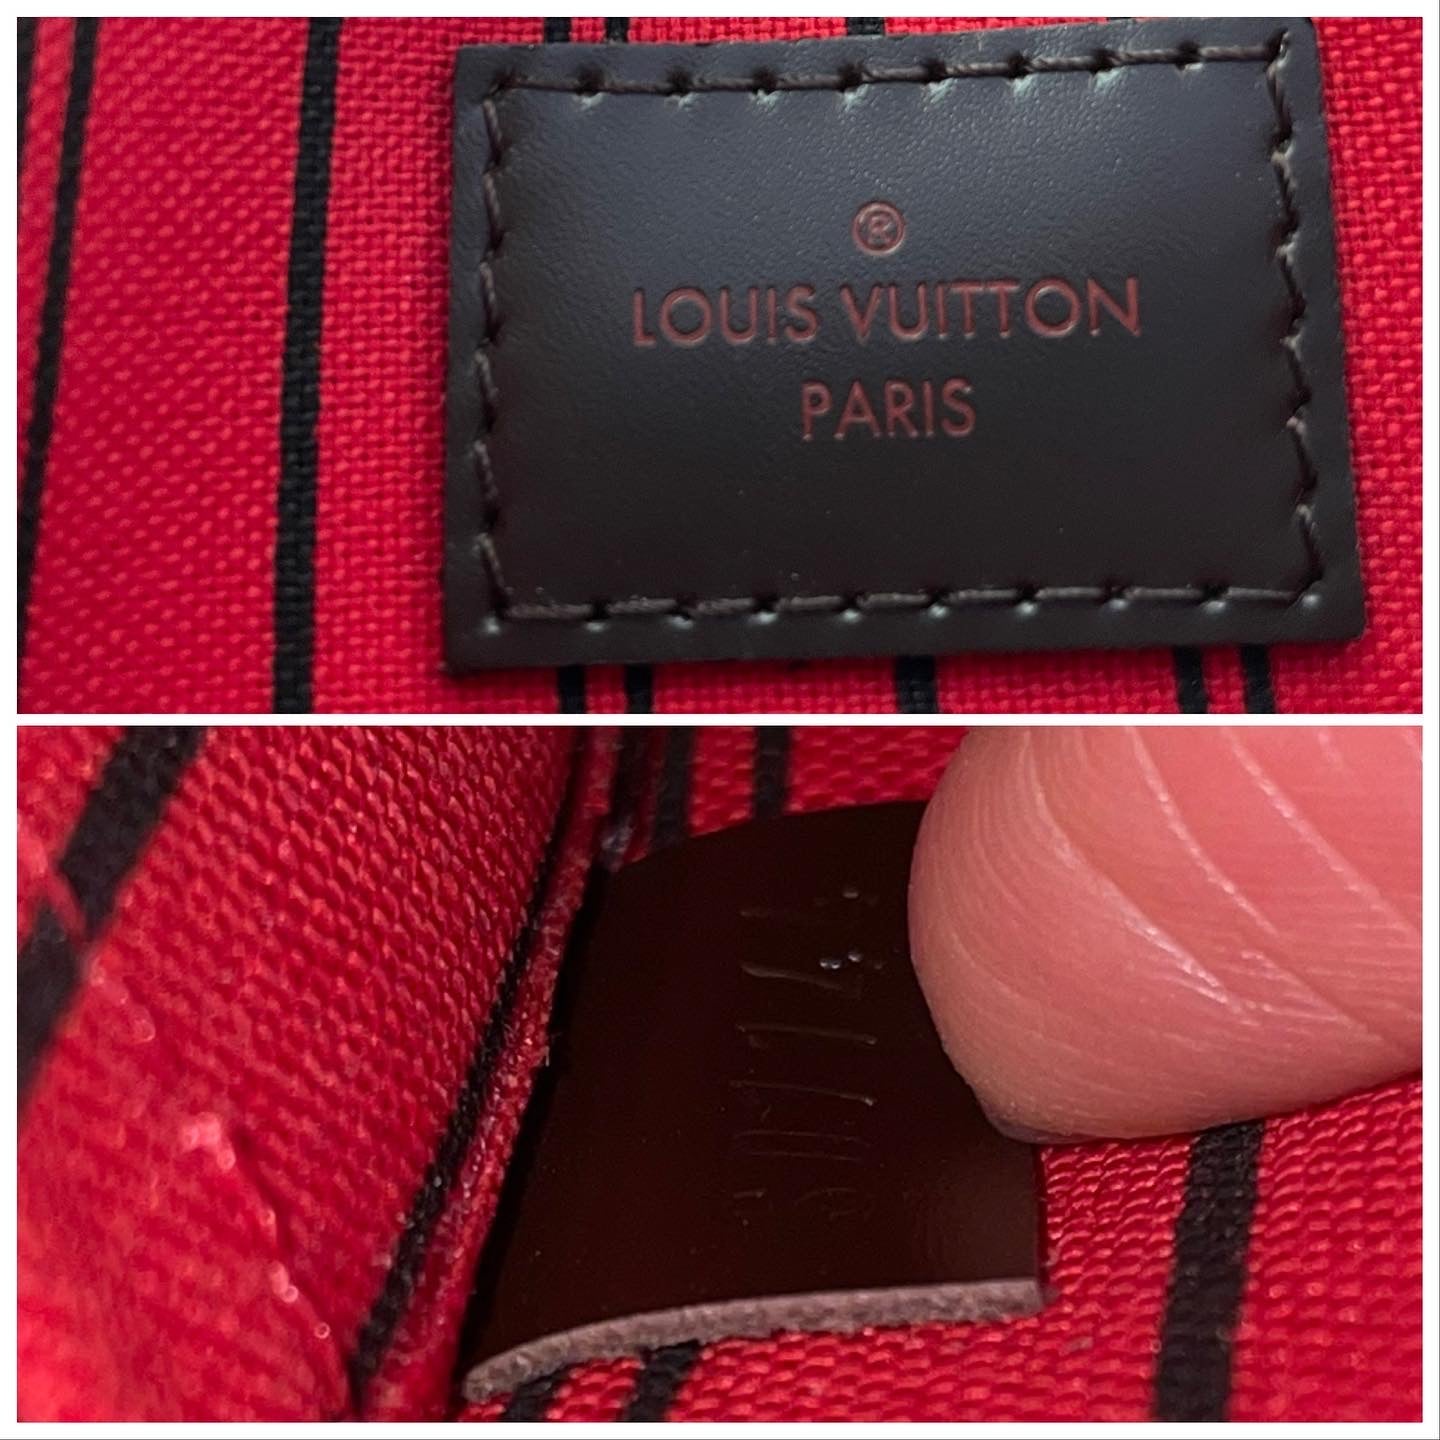 Louis Vuitton Damier Ebene Pouch wristlet